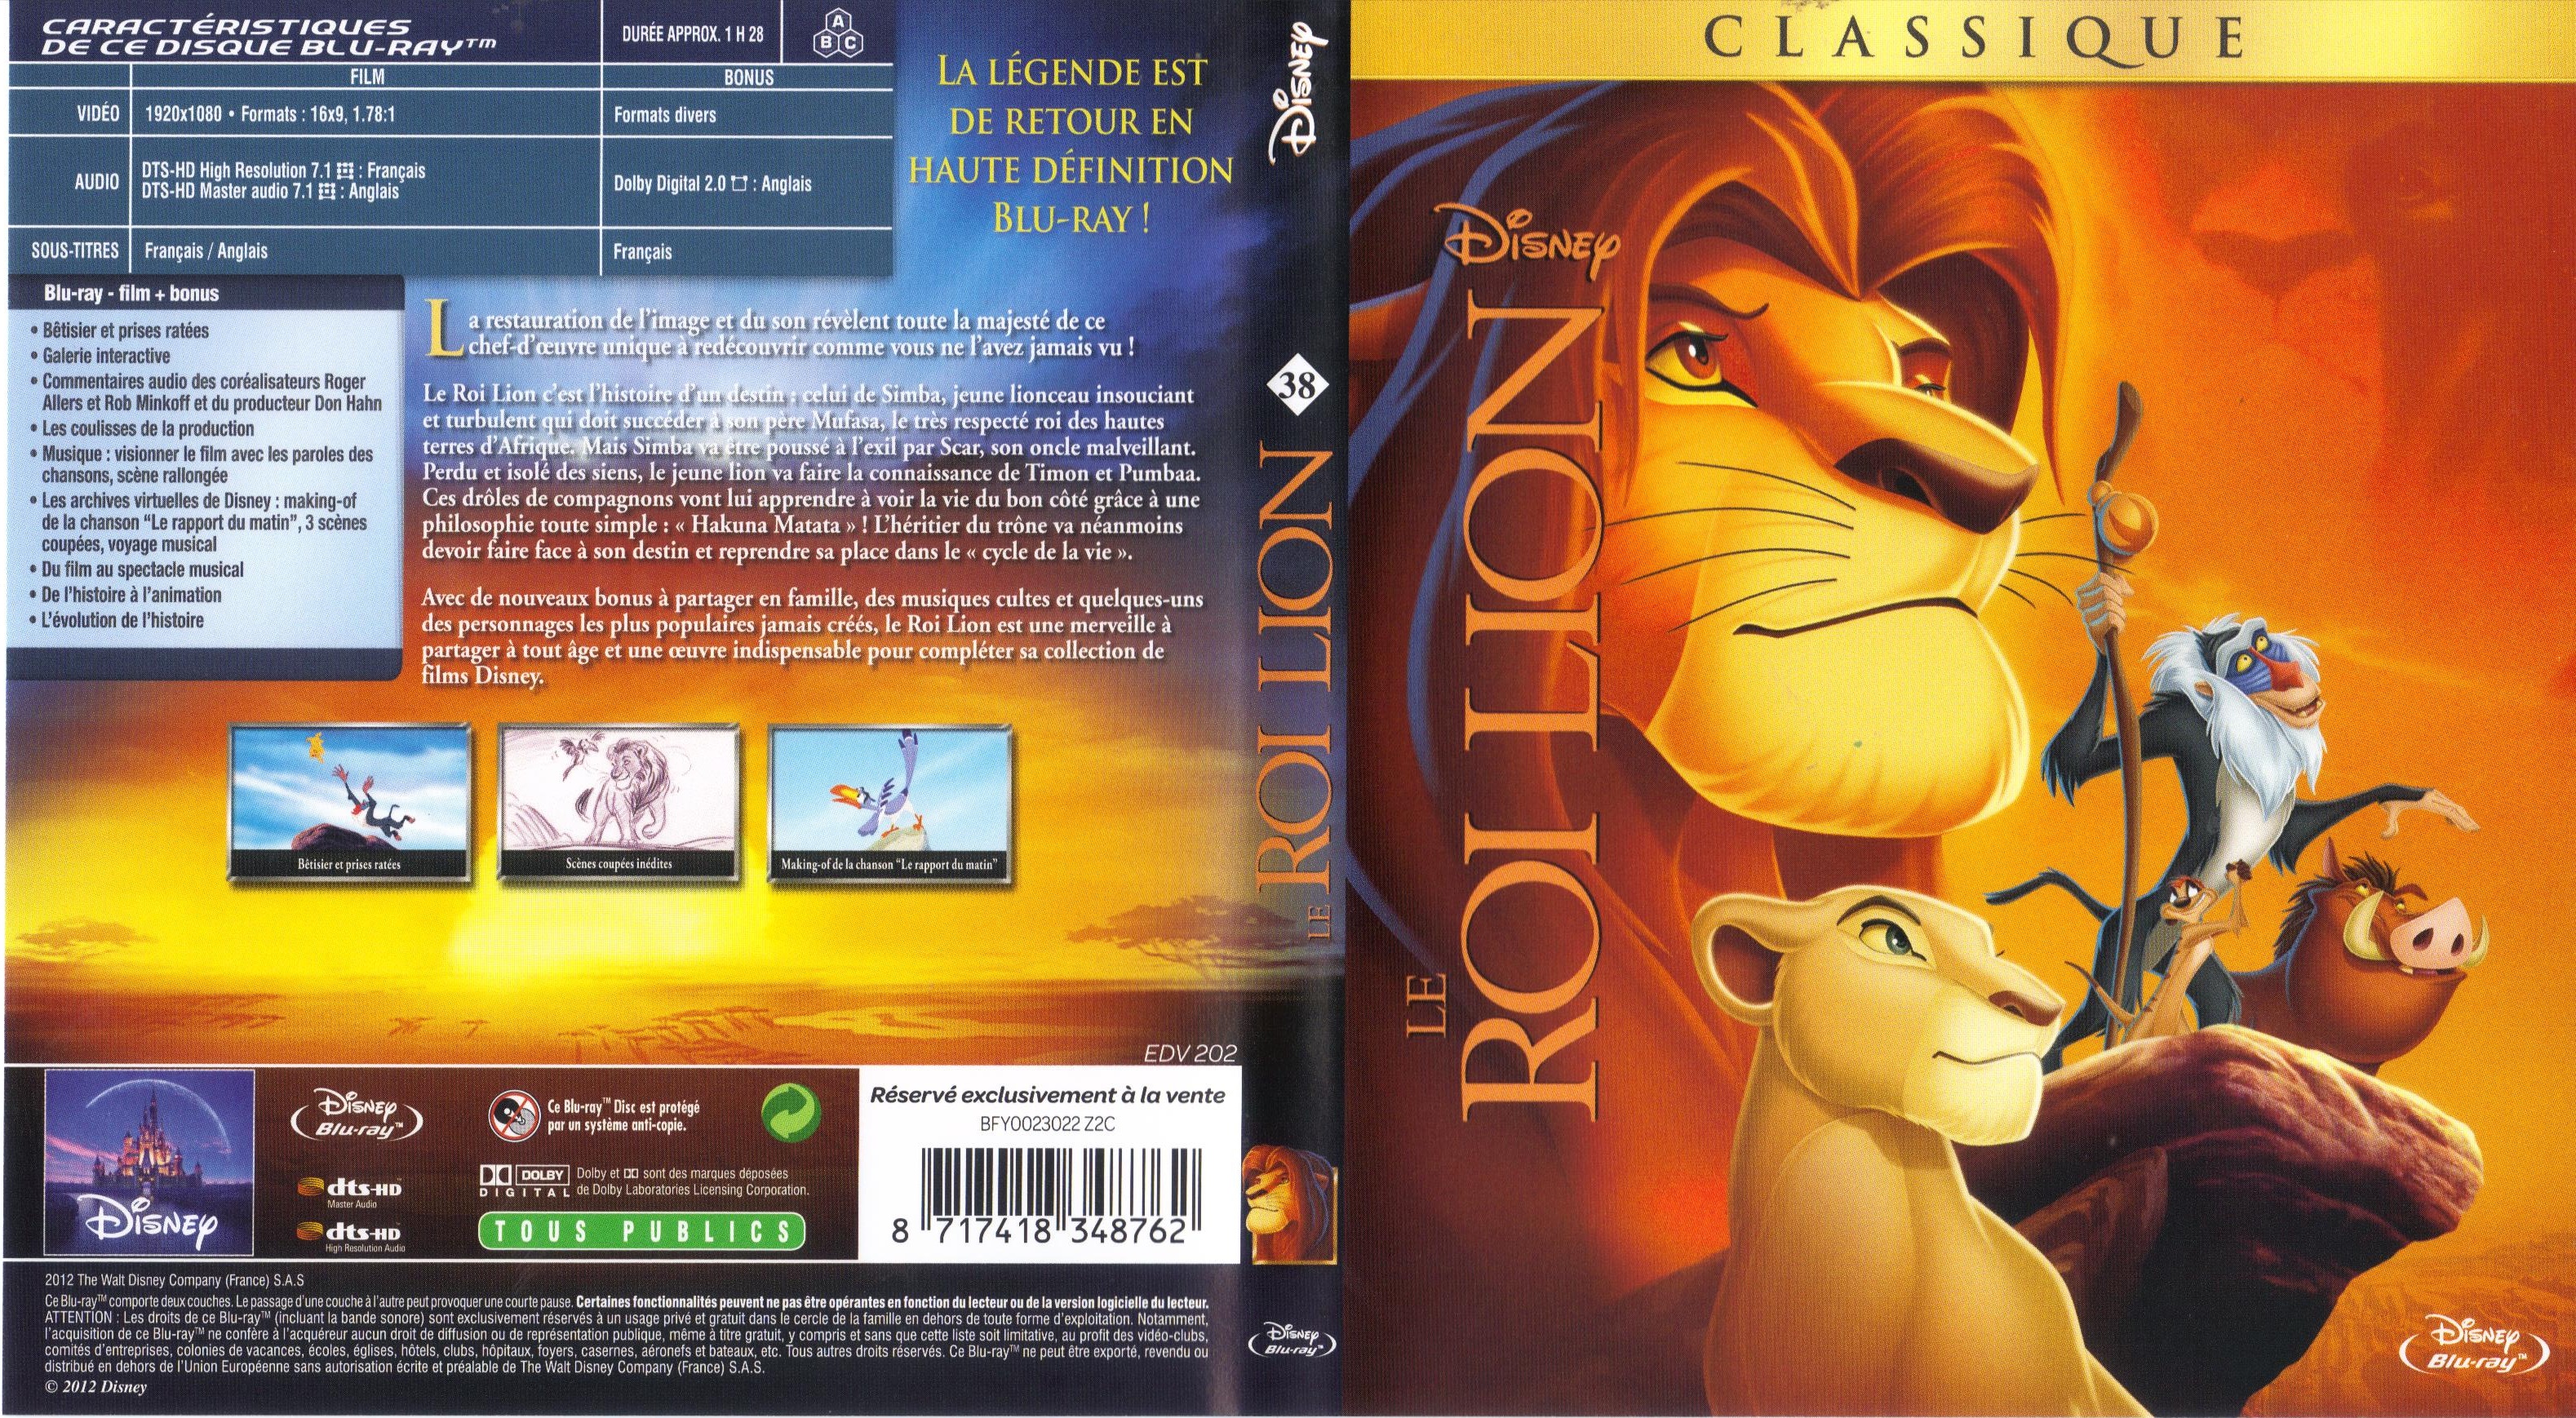 Jaquette DVD Le Roi Lion (BLU-RAY) v2